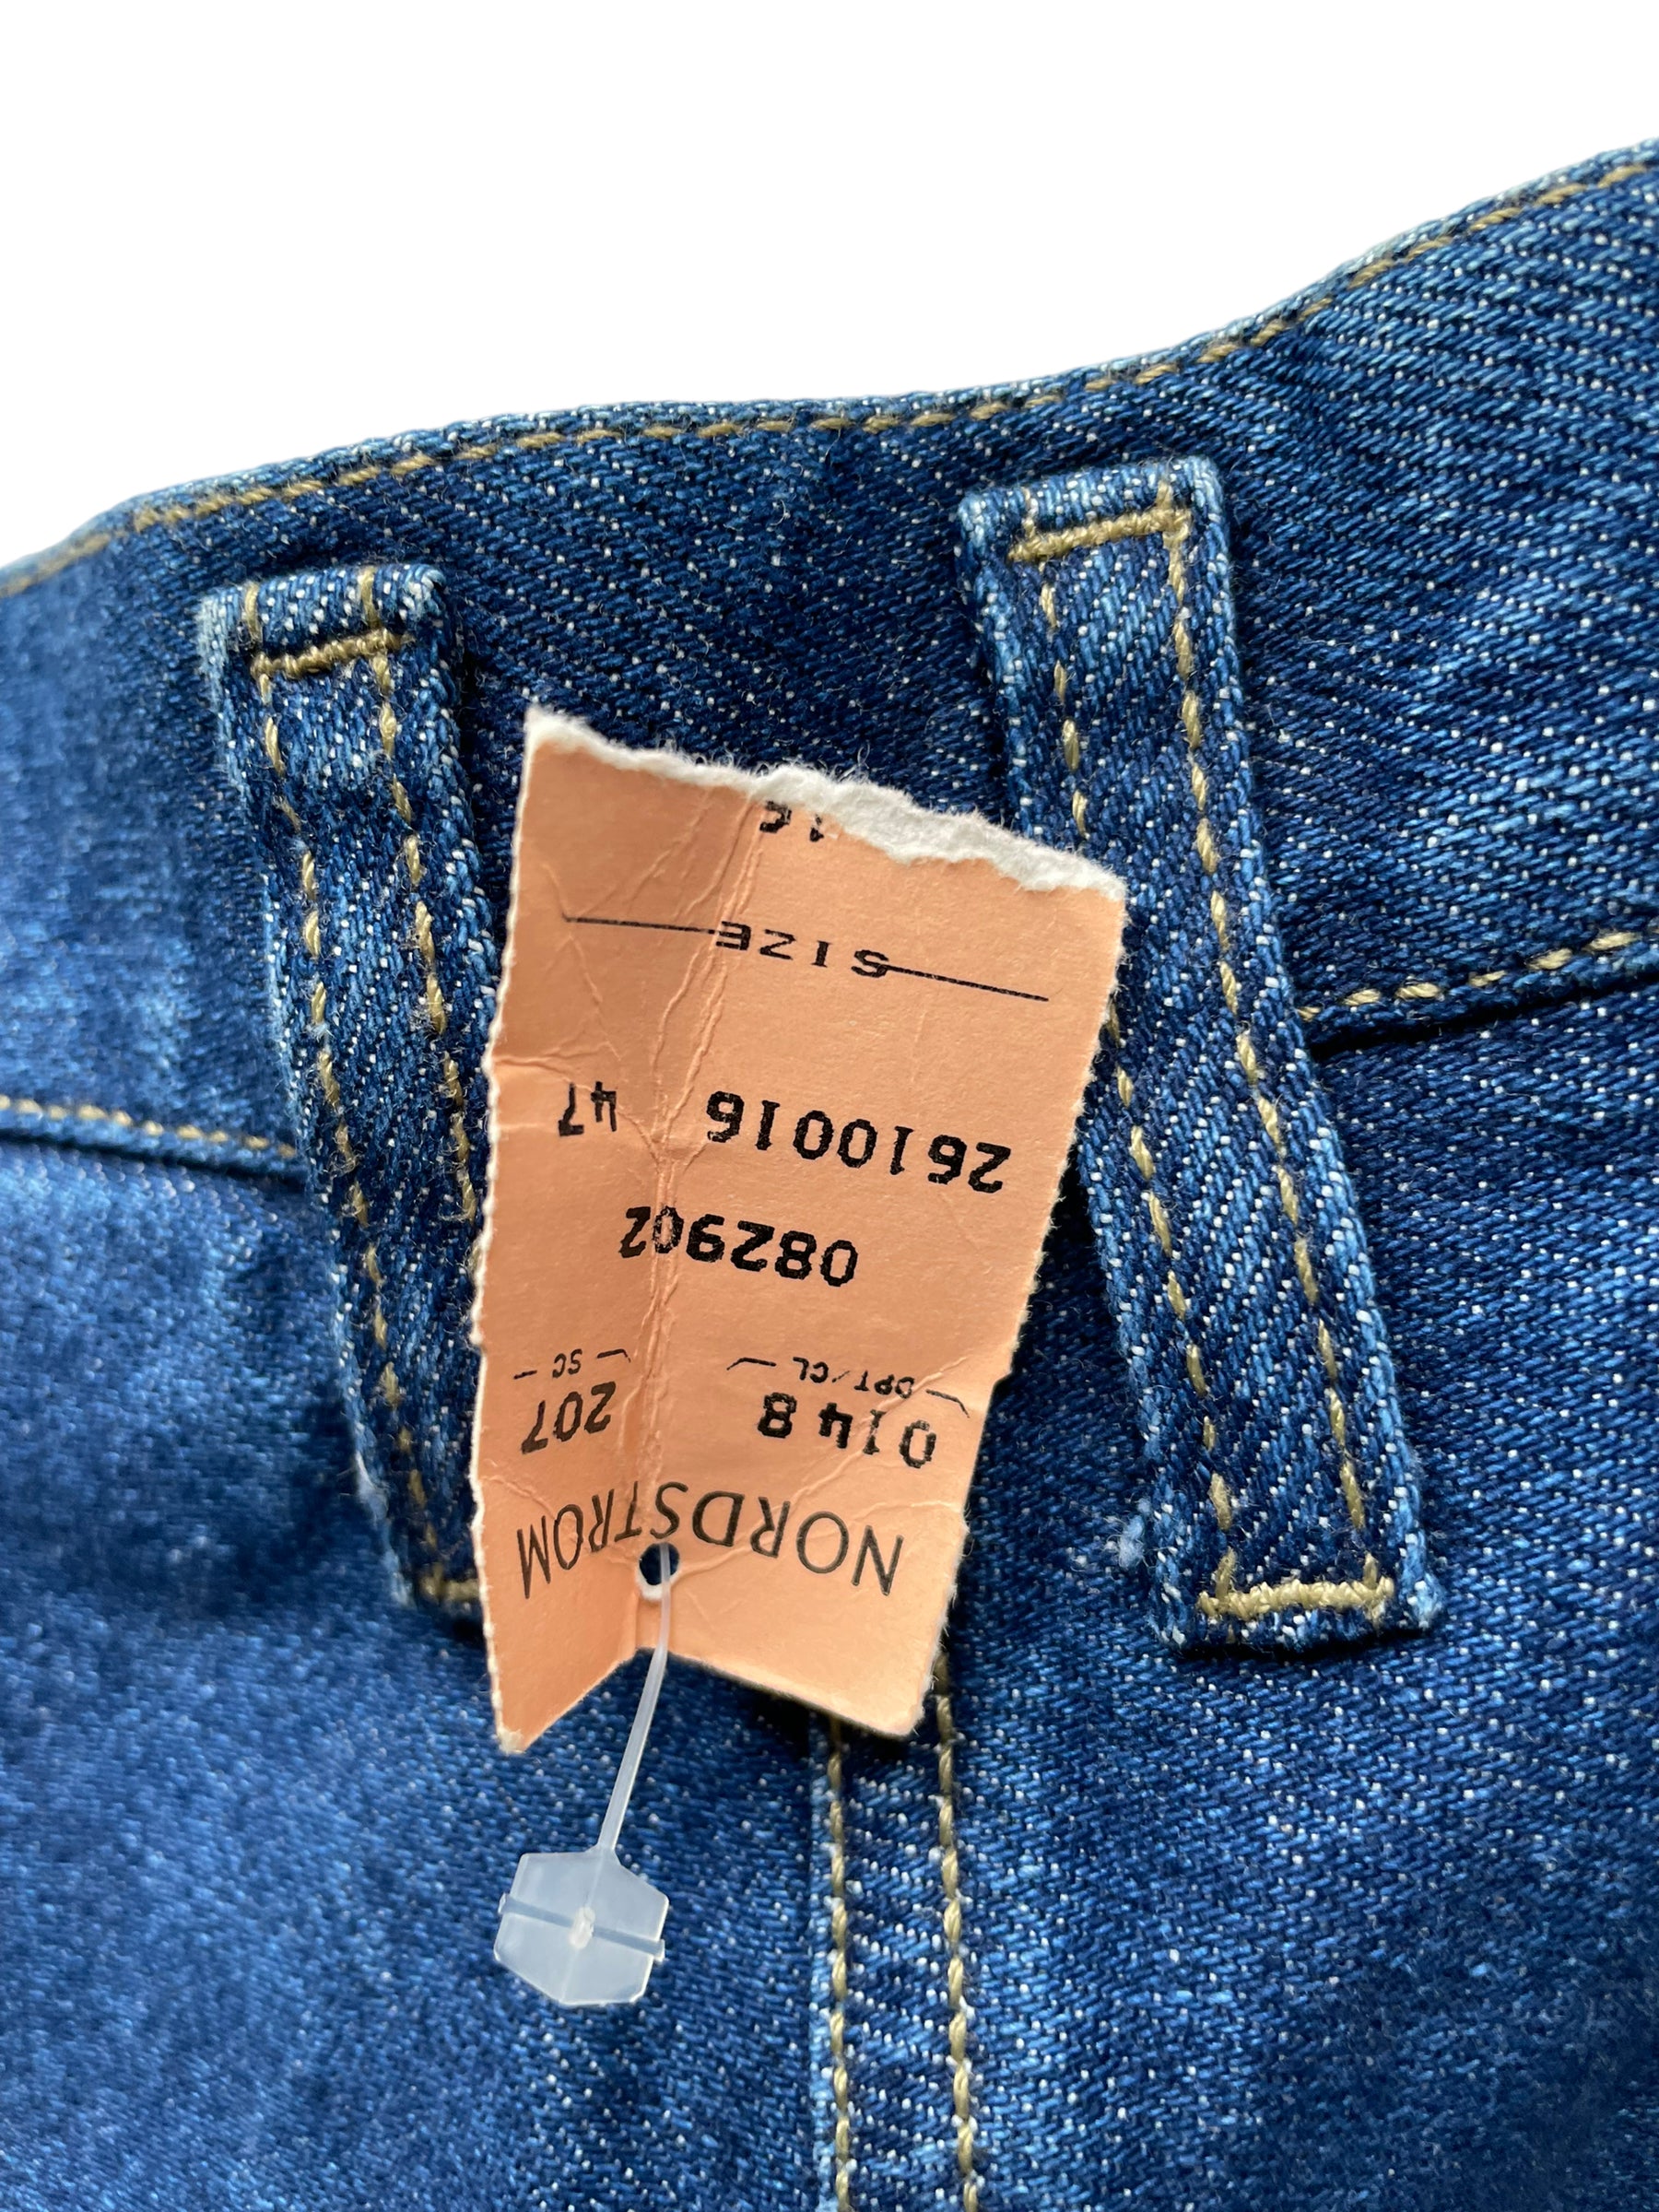 Nordstrom tag view of Vintage Deadstock 80's Liz Claiborne Side Zip Stir Up Jeans